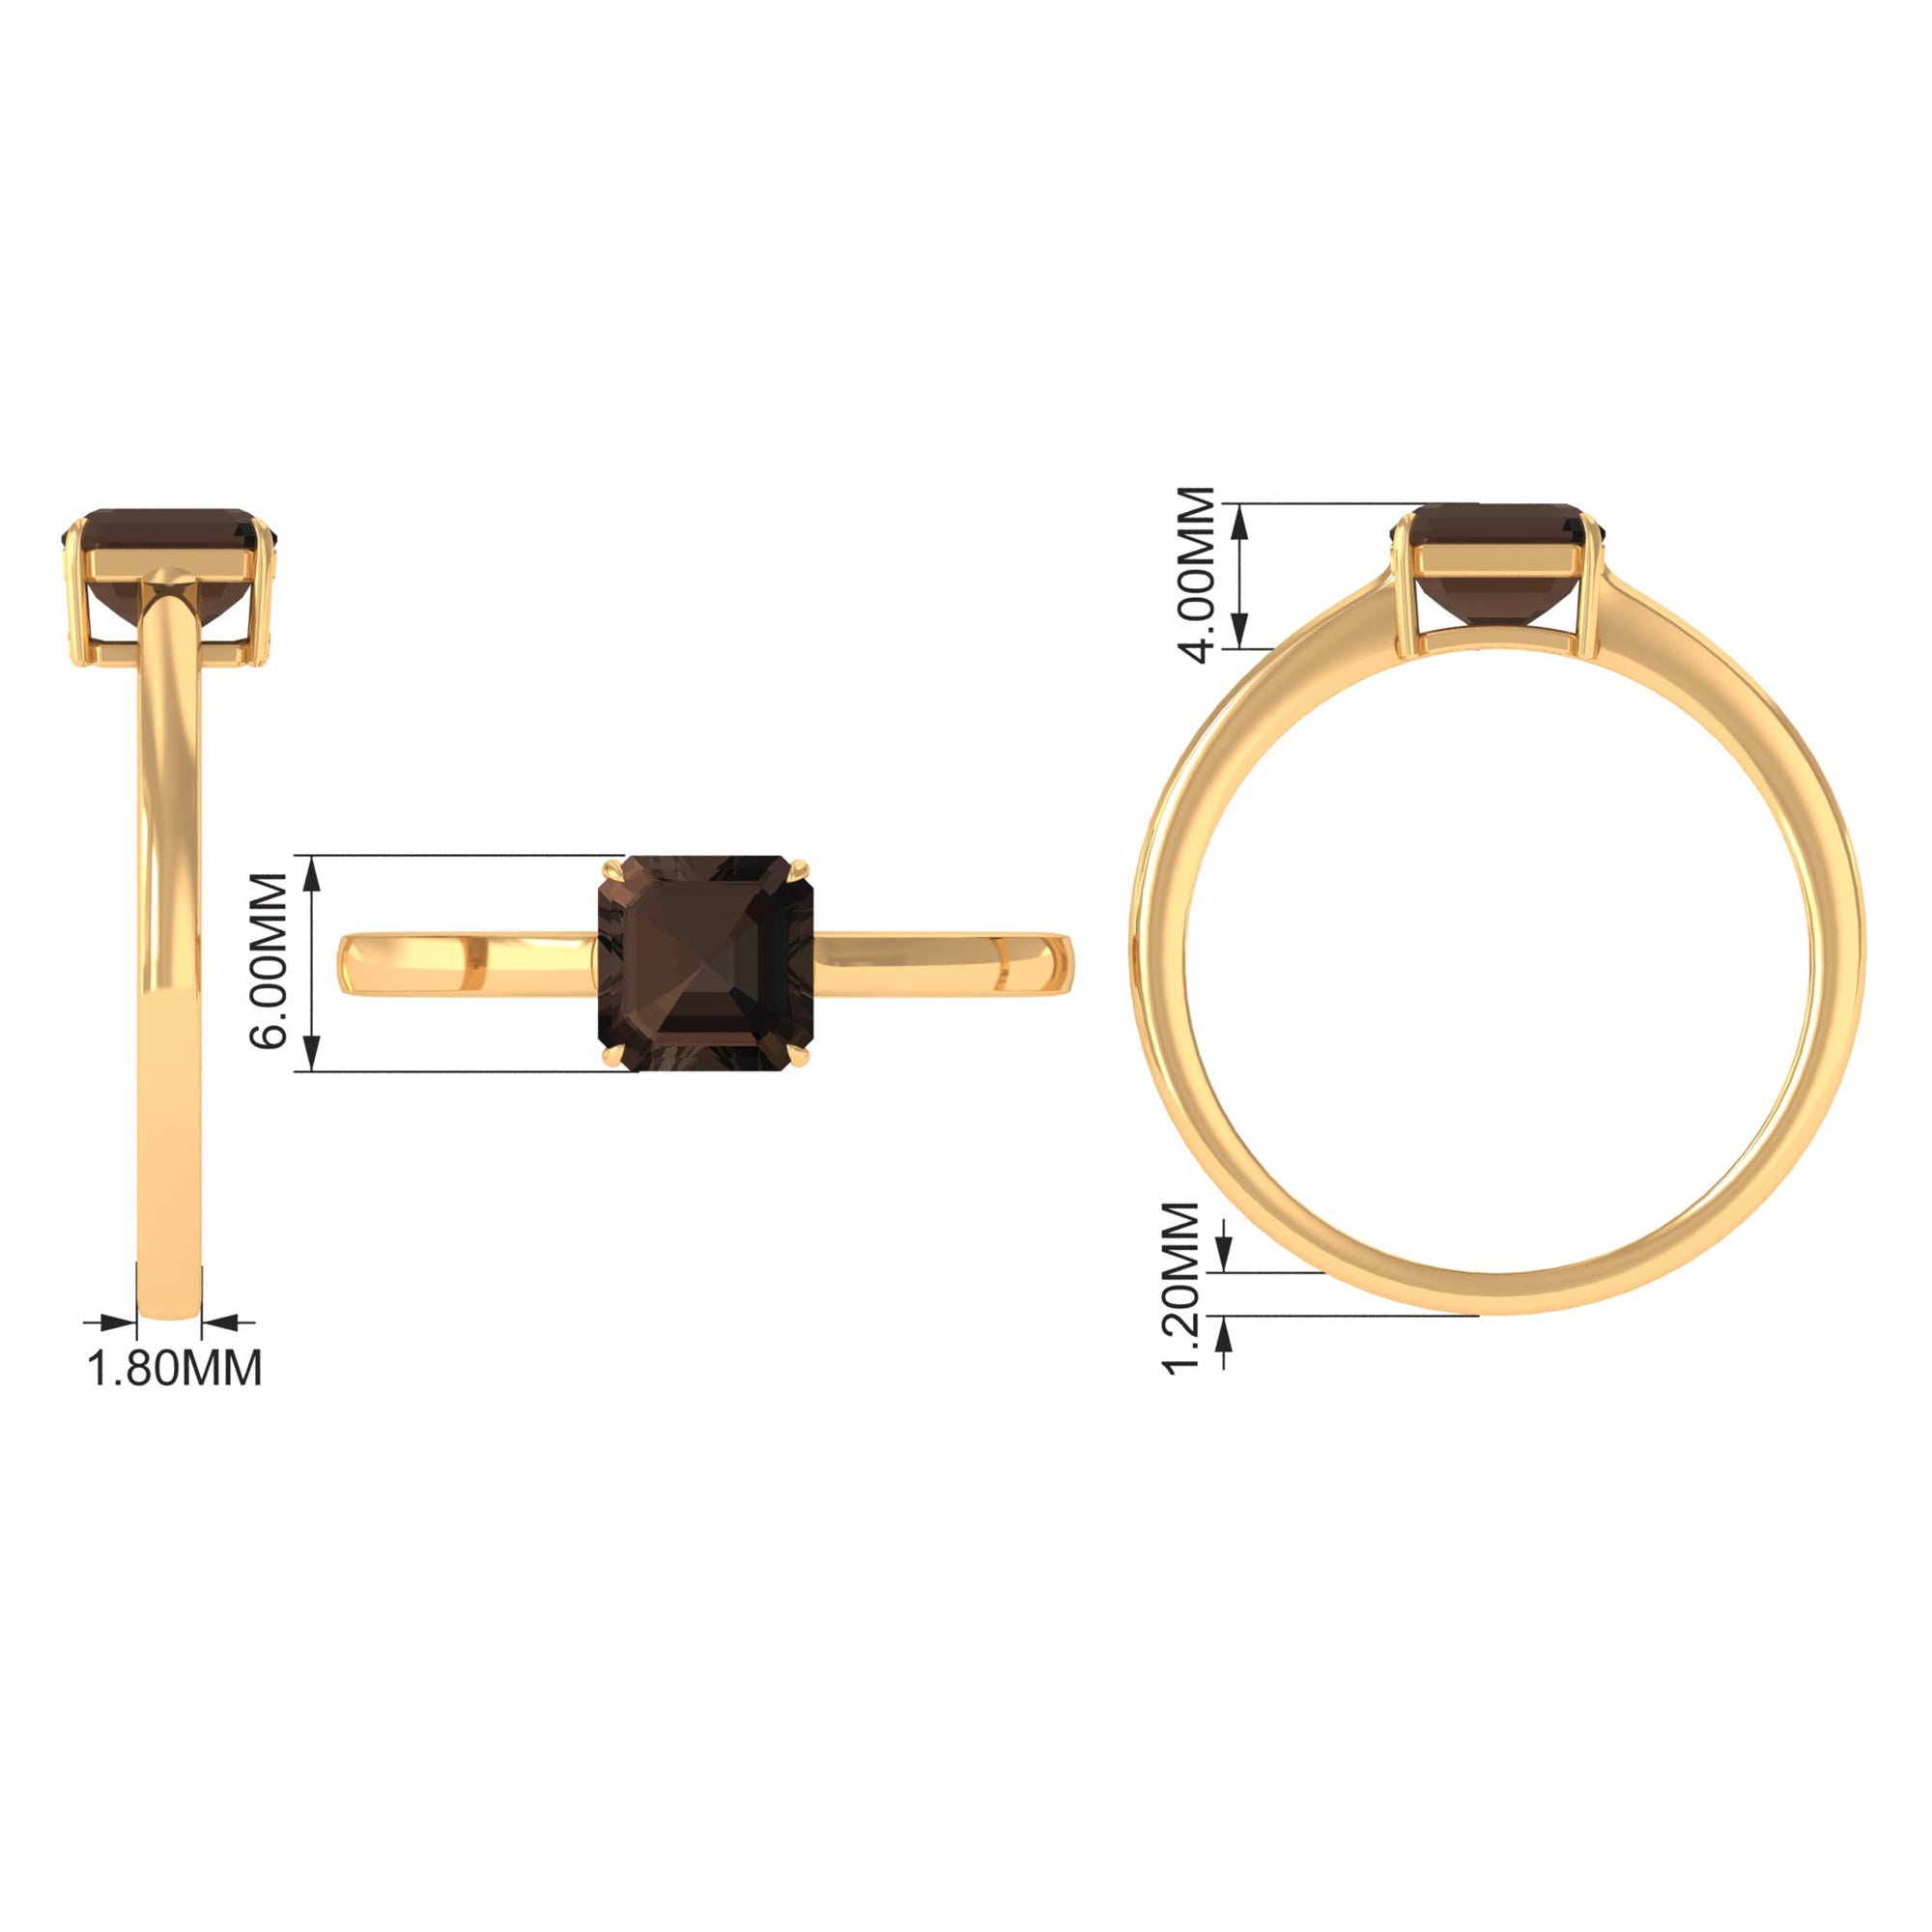 Rosec Jewels-Simple Asscher Cut Smoky Quartz Solitaire Ring in Gold